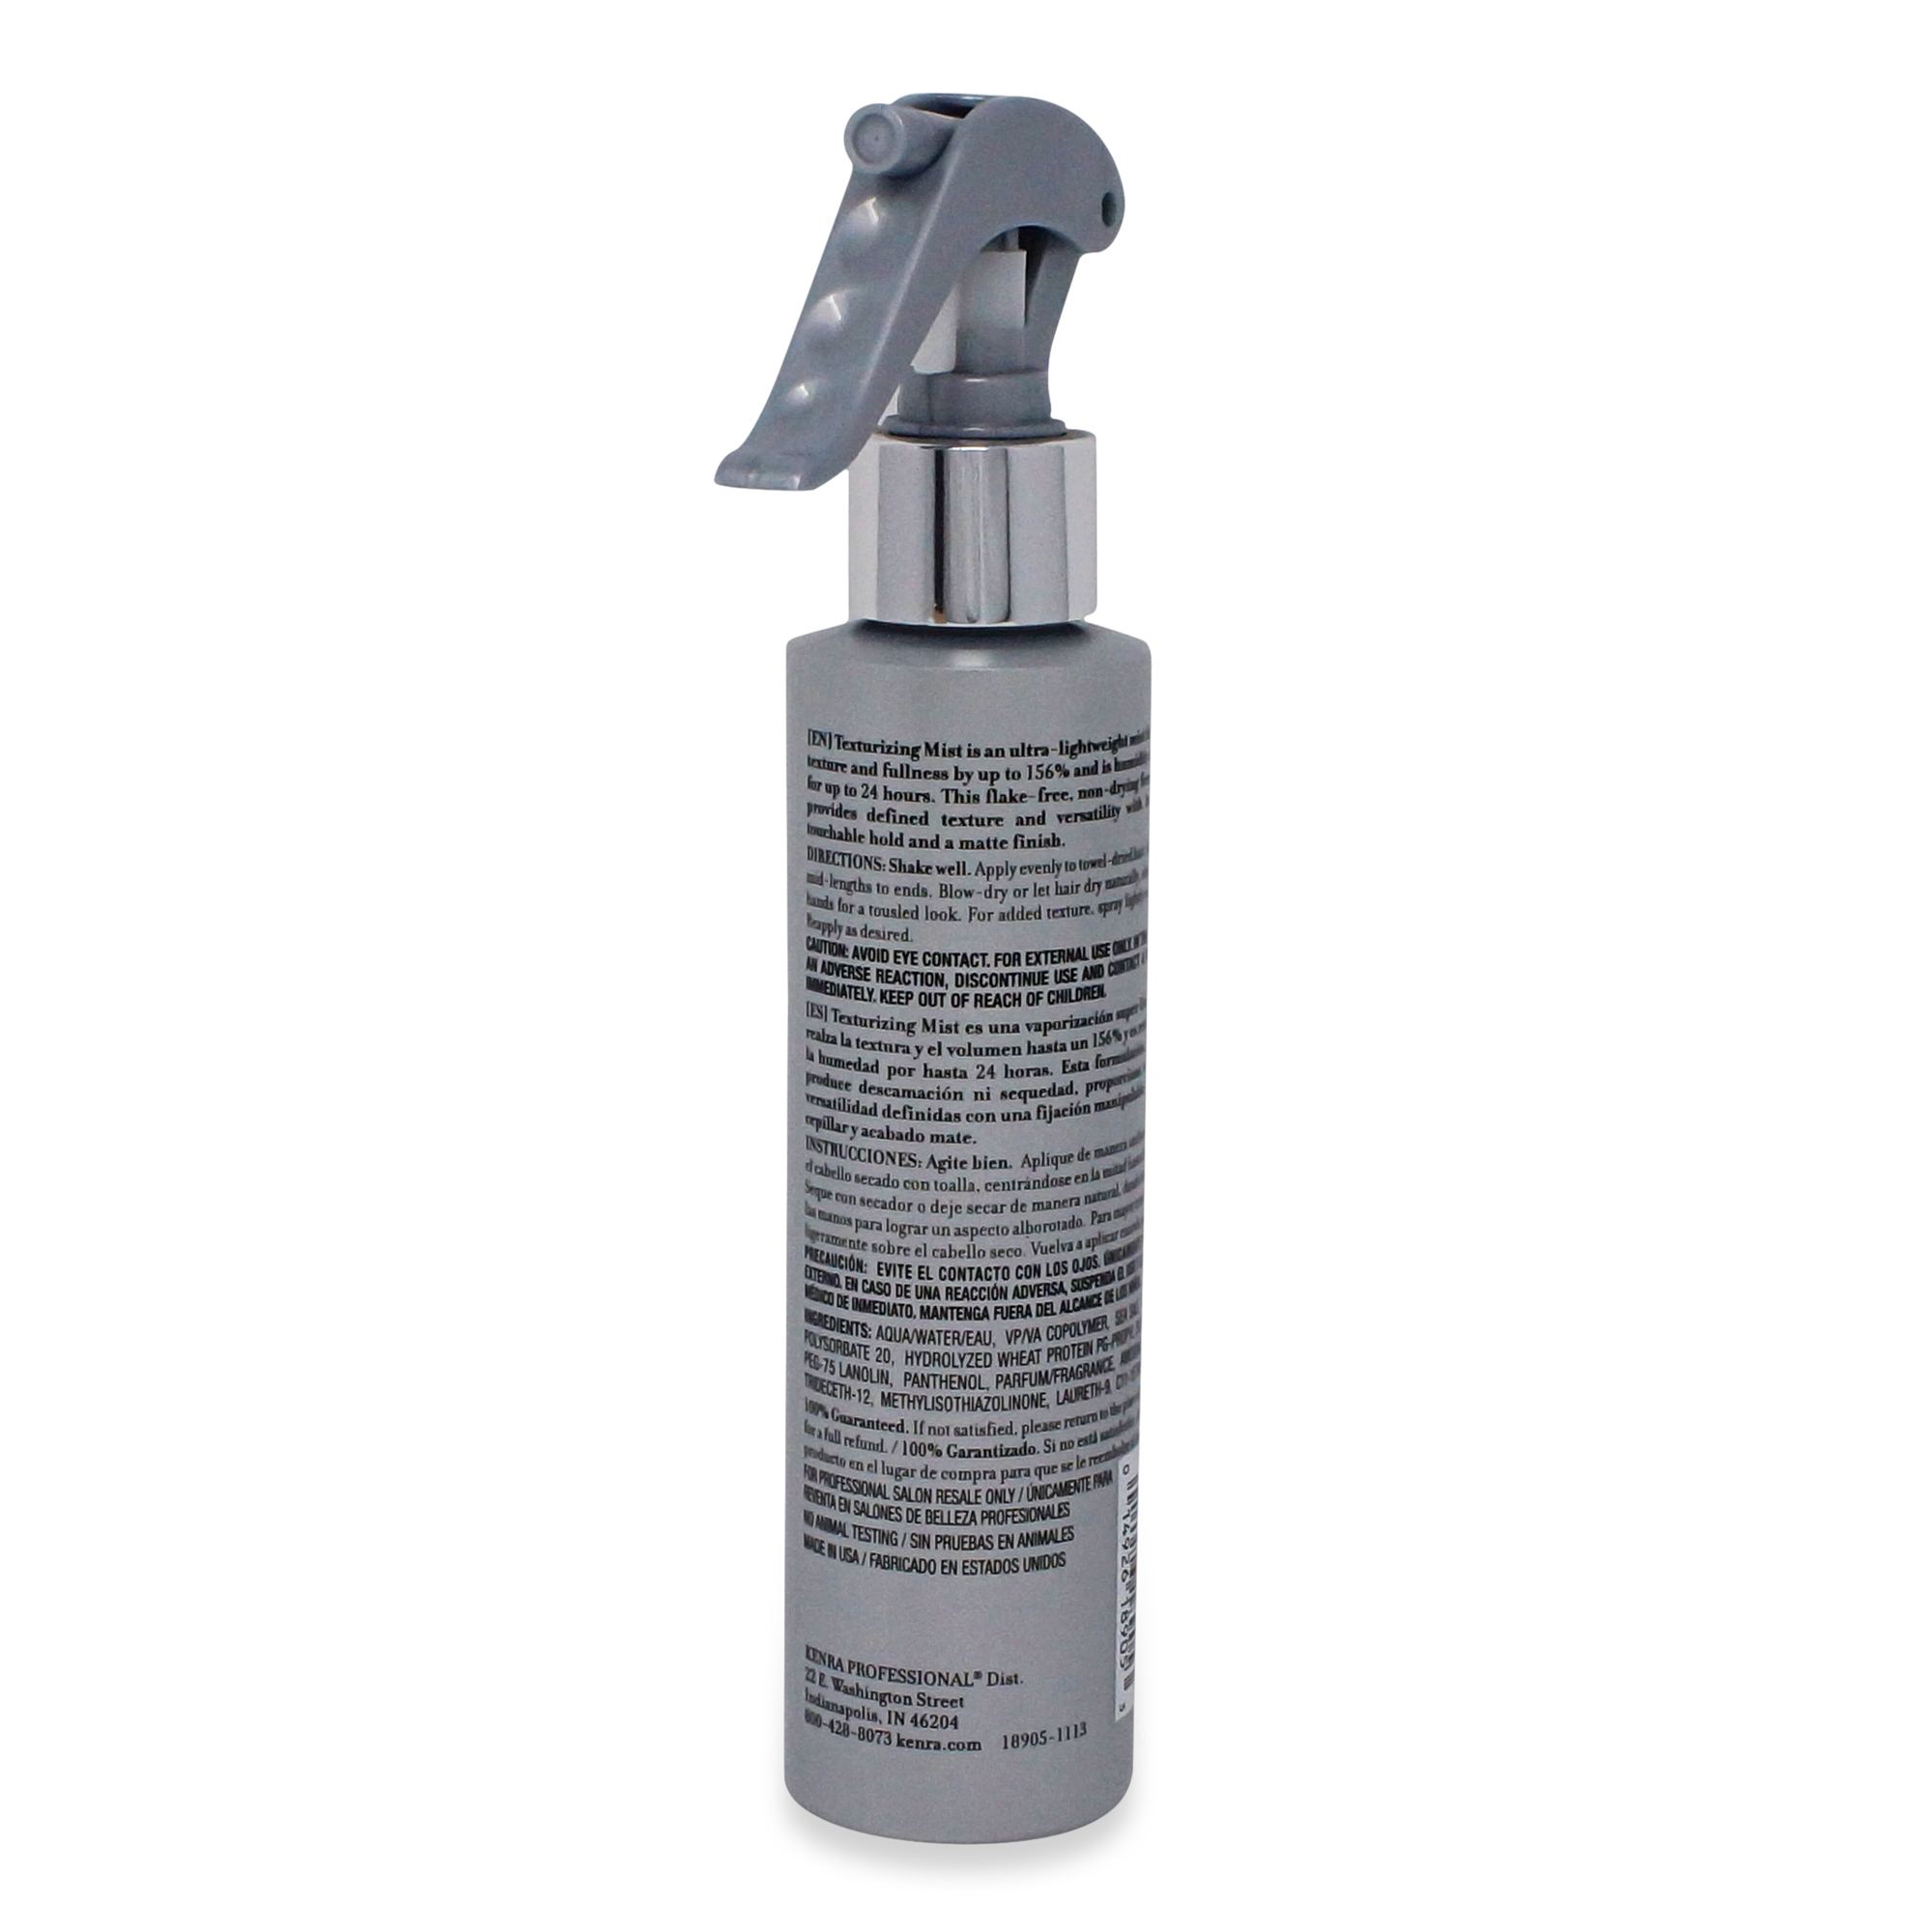 Kenra Platinum Dry Texture Spray #6 5 oz - image 2 of 3